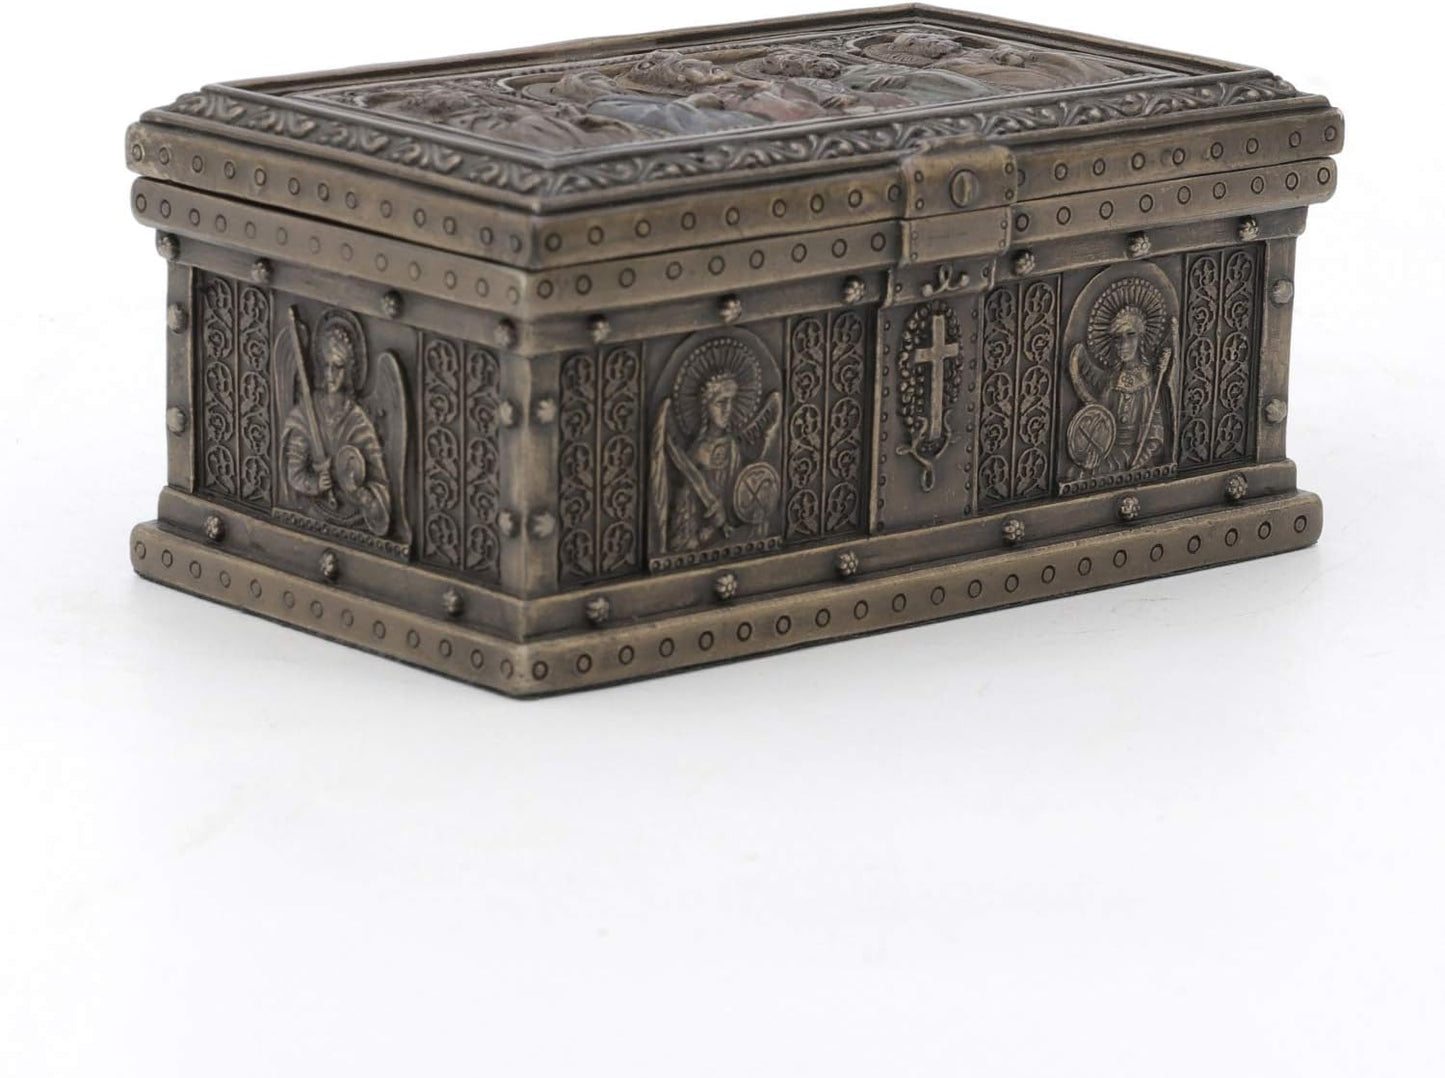 Catholic Saints Trinket Box